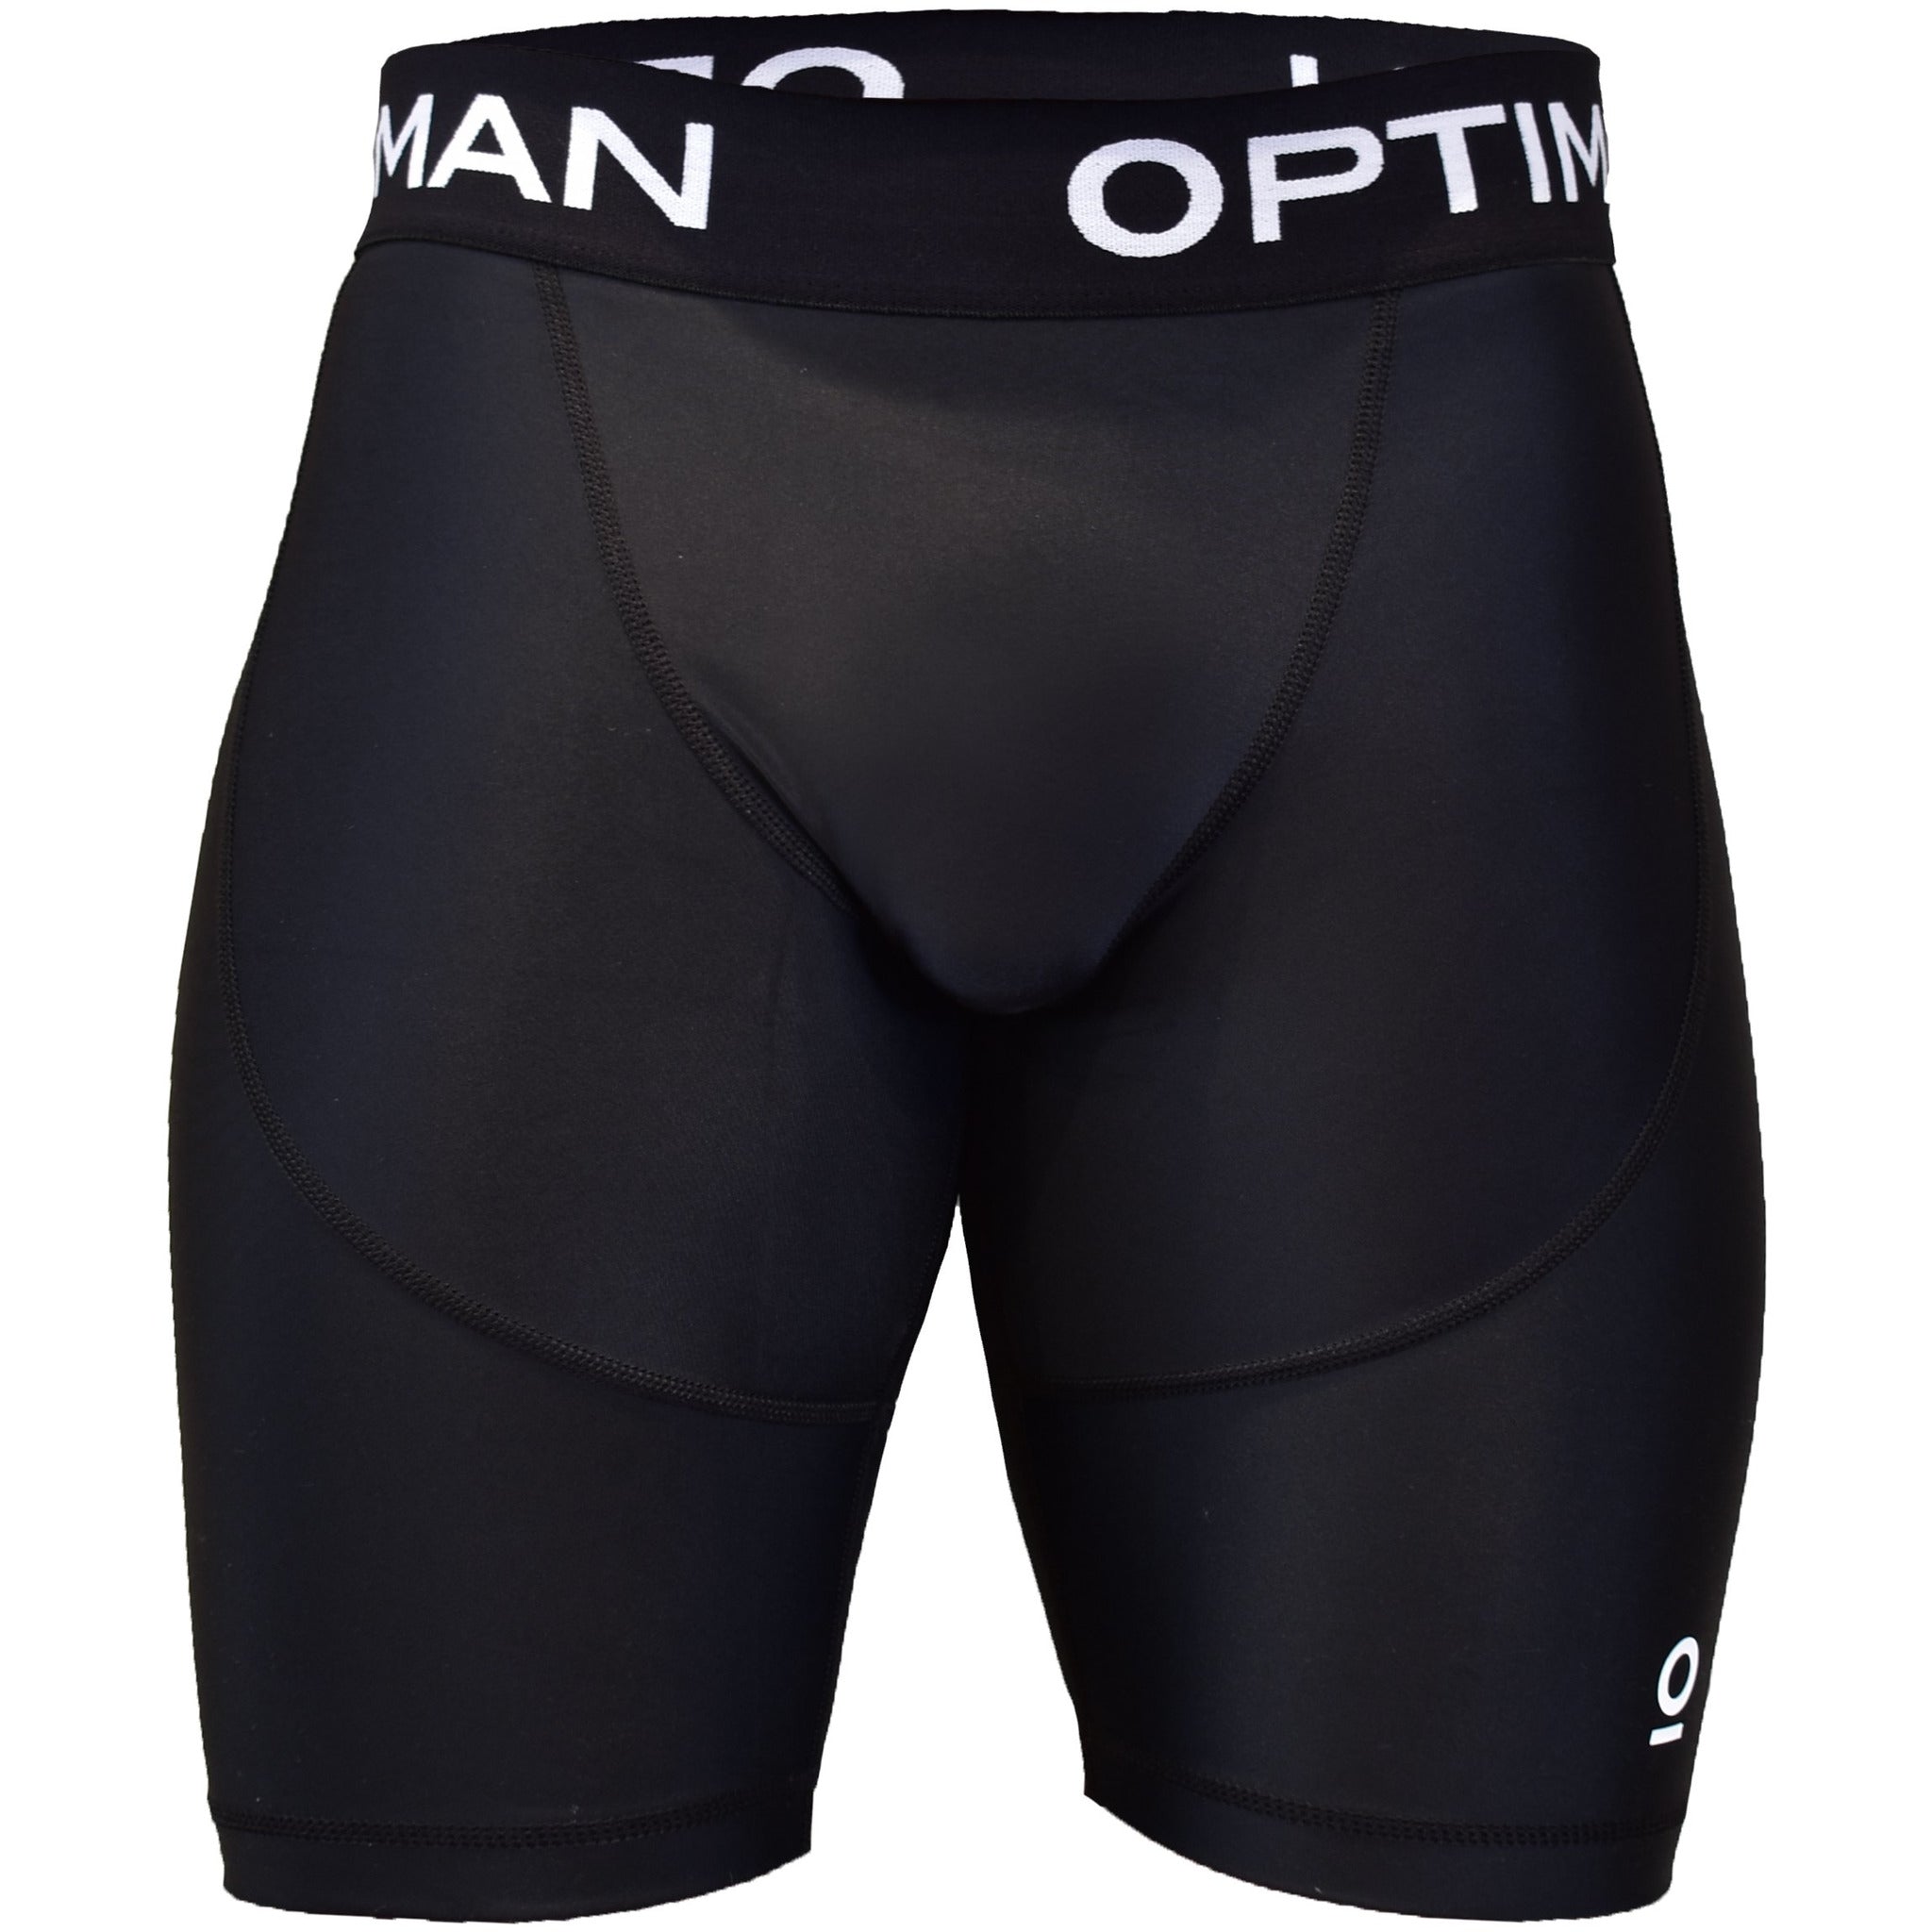 BJJ Compression Shorts (Vale Tudo Shorts) for Men | Optimal Human